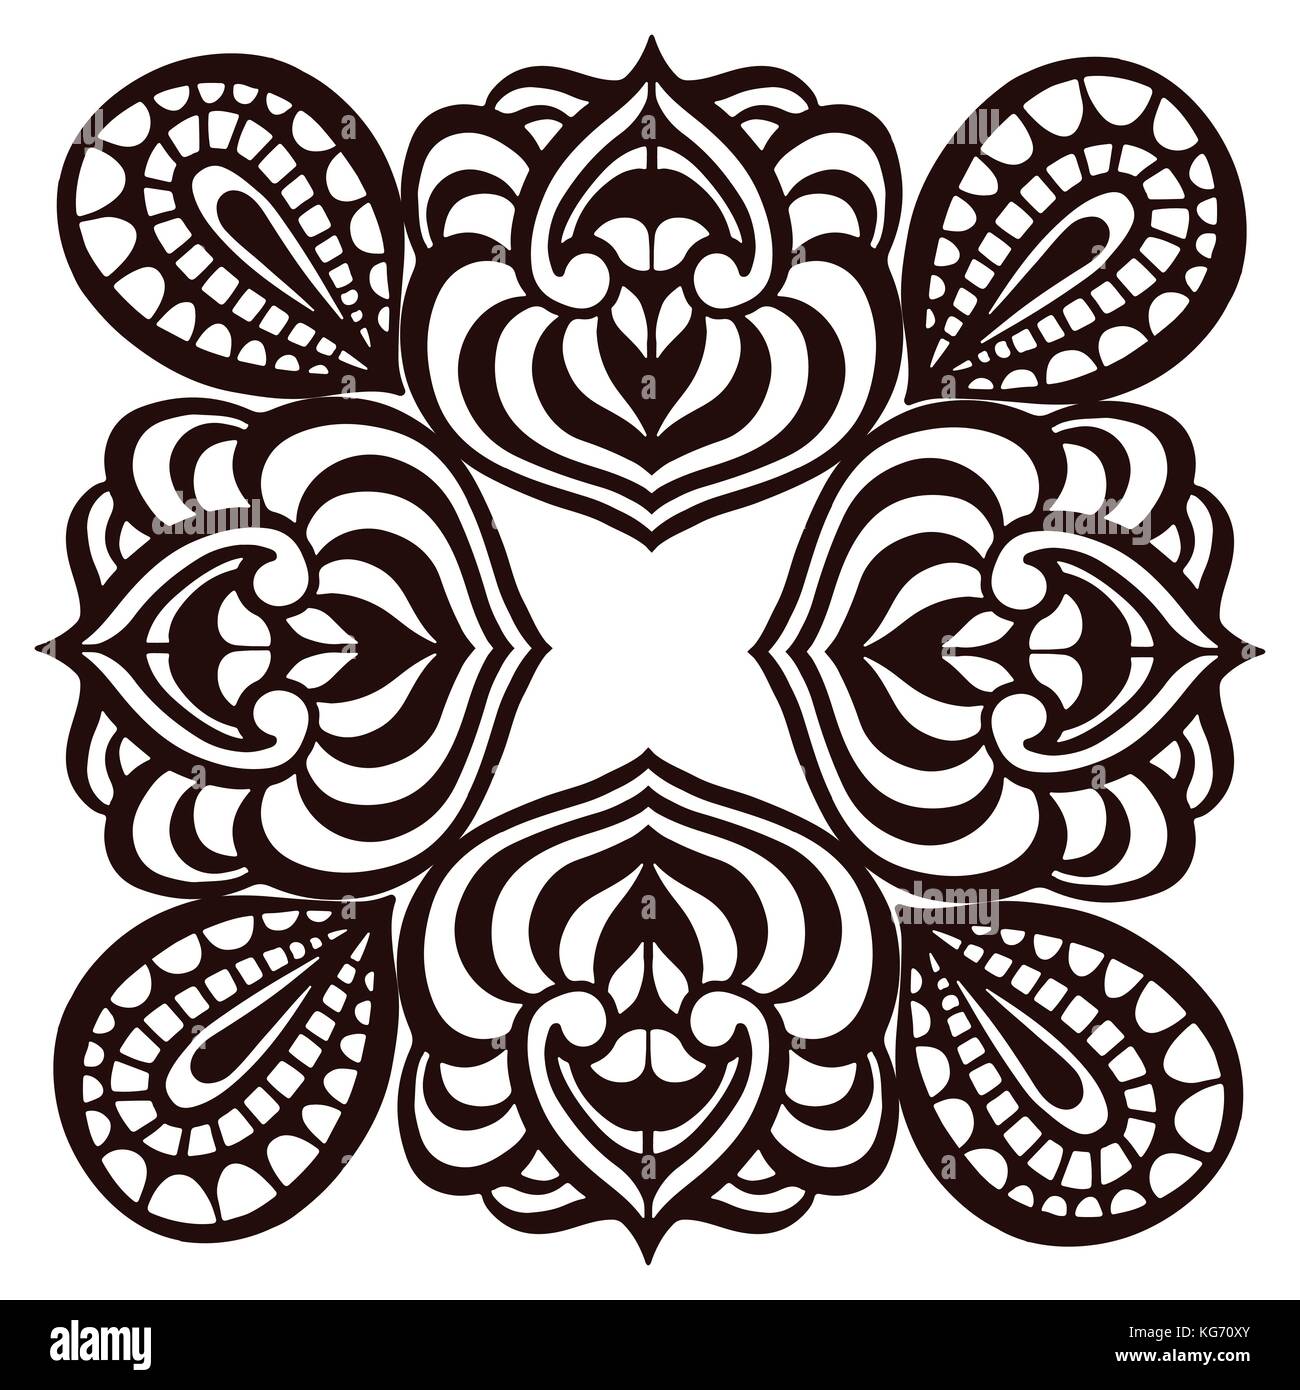 Mandala. Round Ornament Pattern. Vintage decorative elements Hand drawn background. Stock Vector